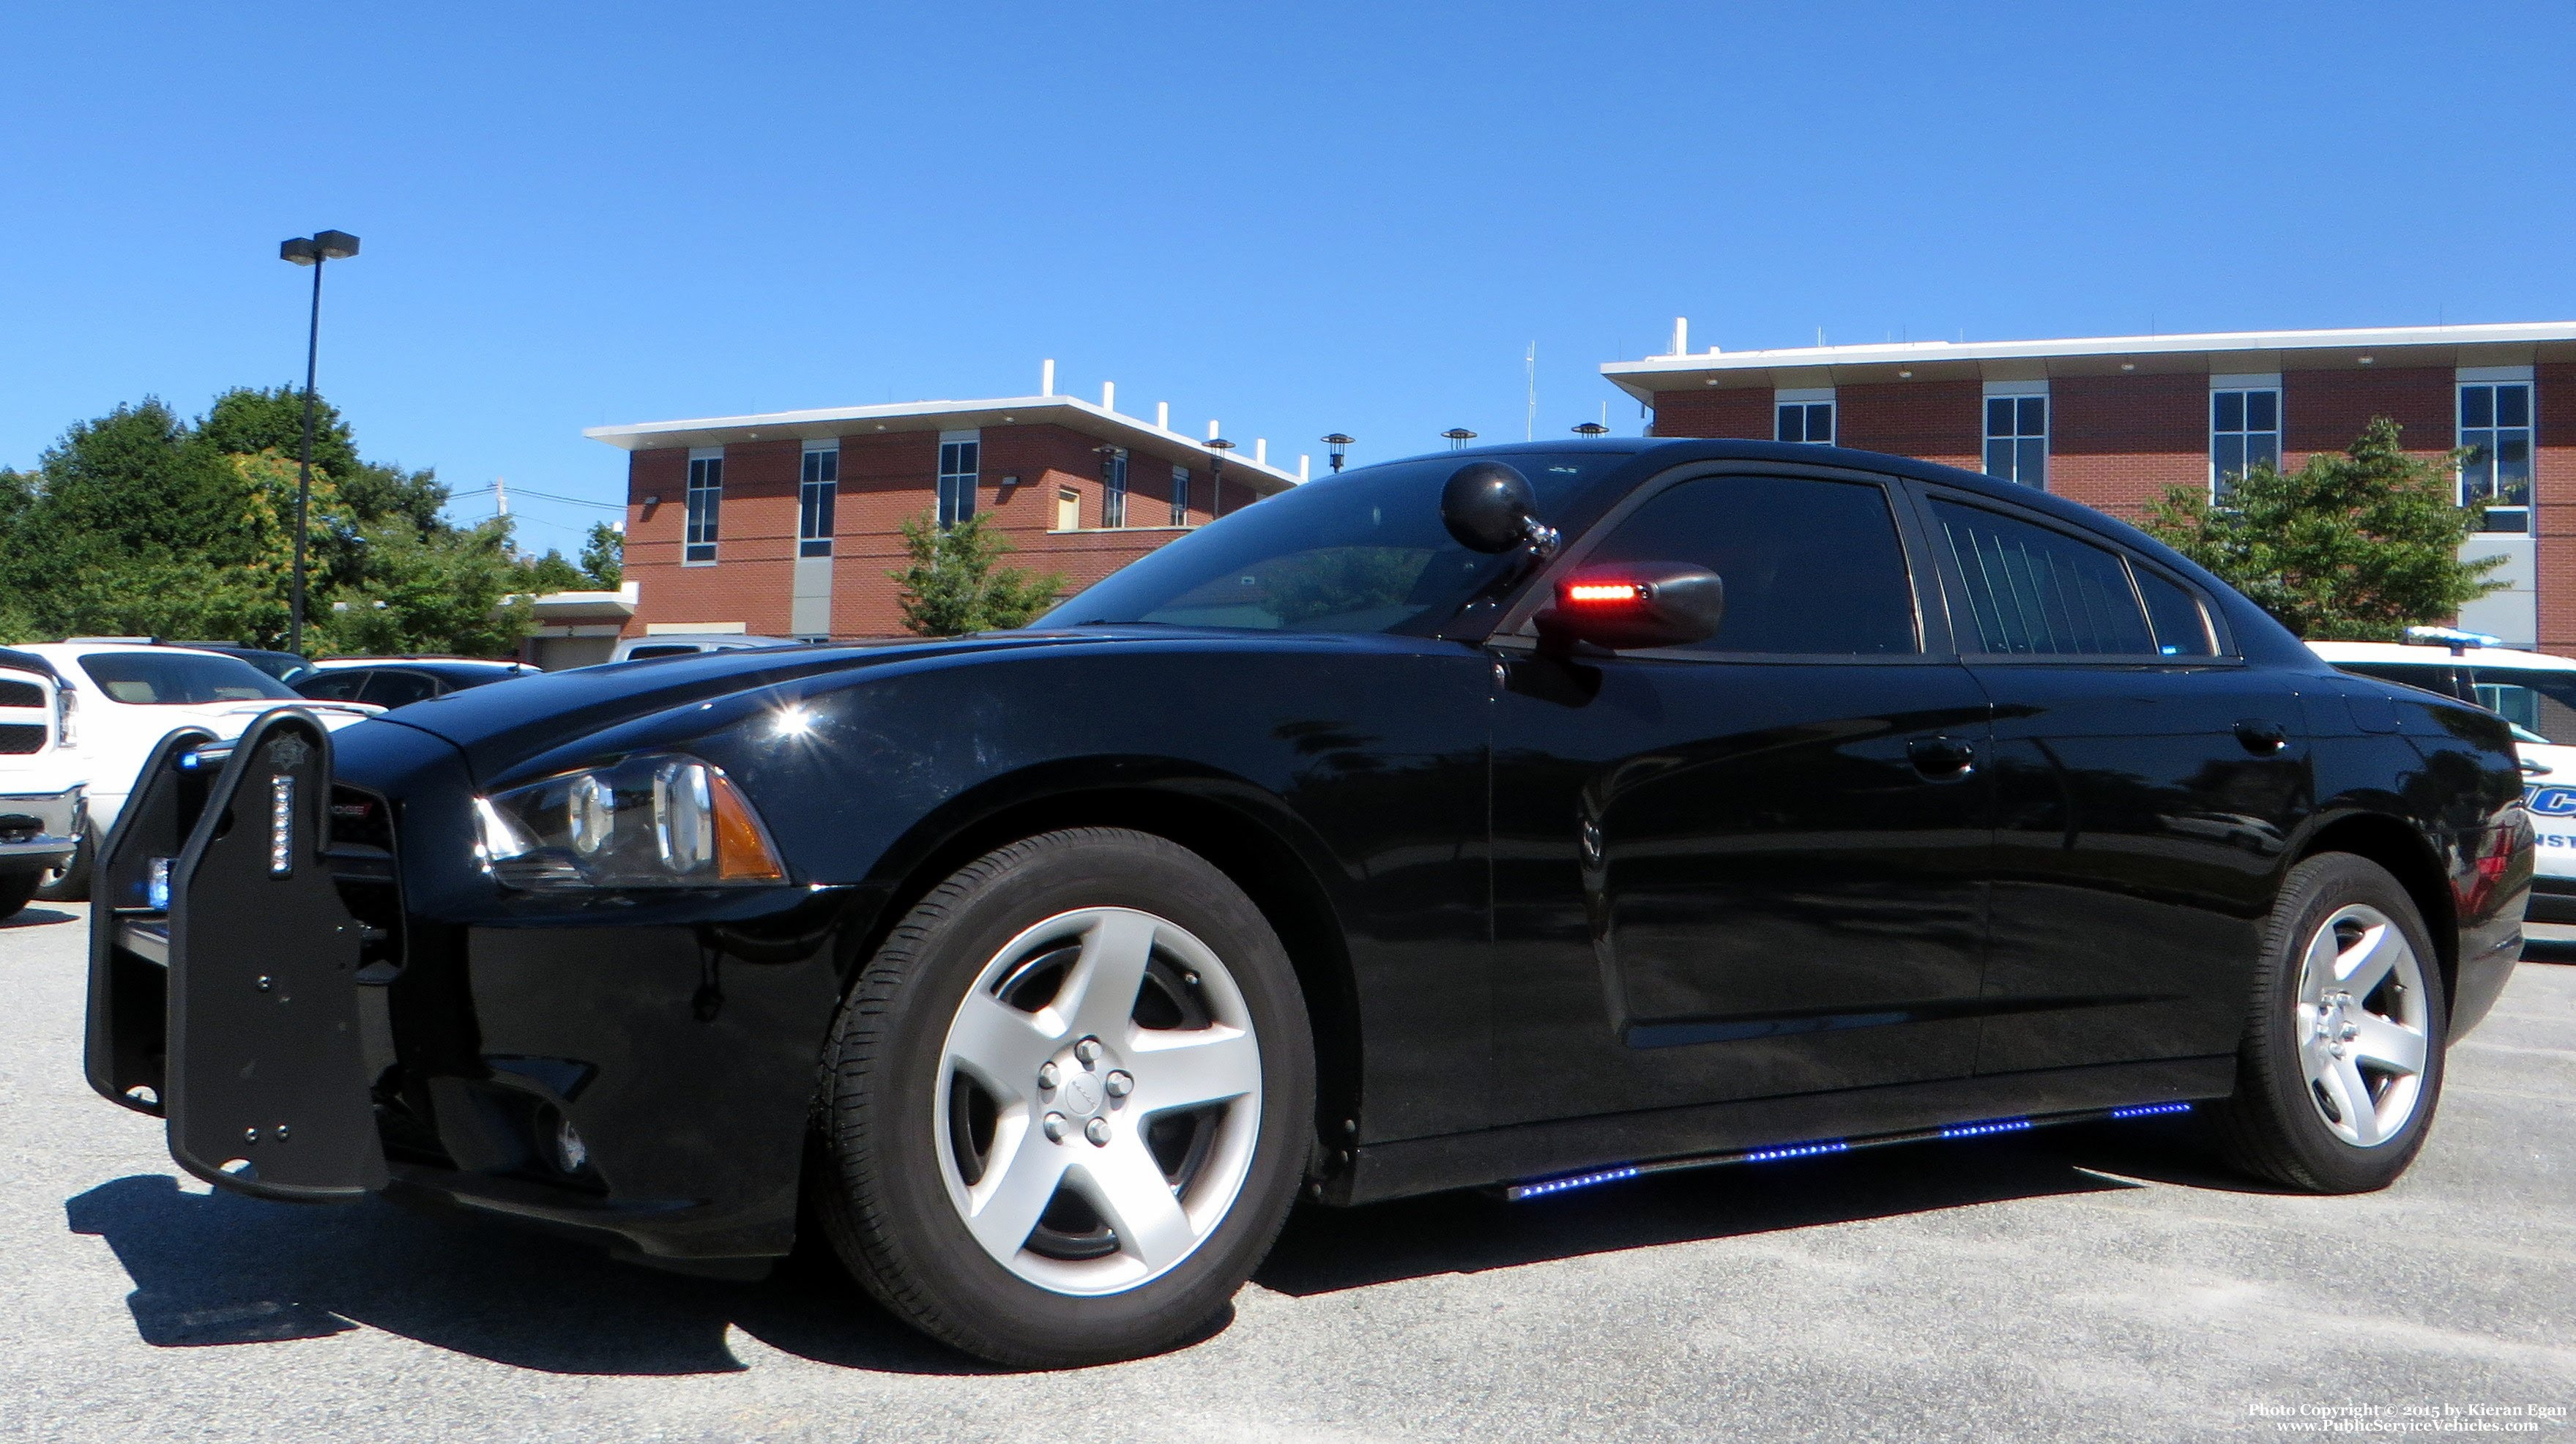 A photo  of Cranston Police
            Cruiser 183, a 2013-2014 Dodge Charger             taken by Kieran Egan